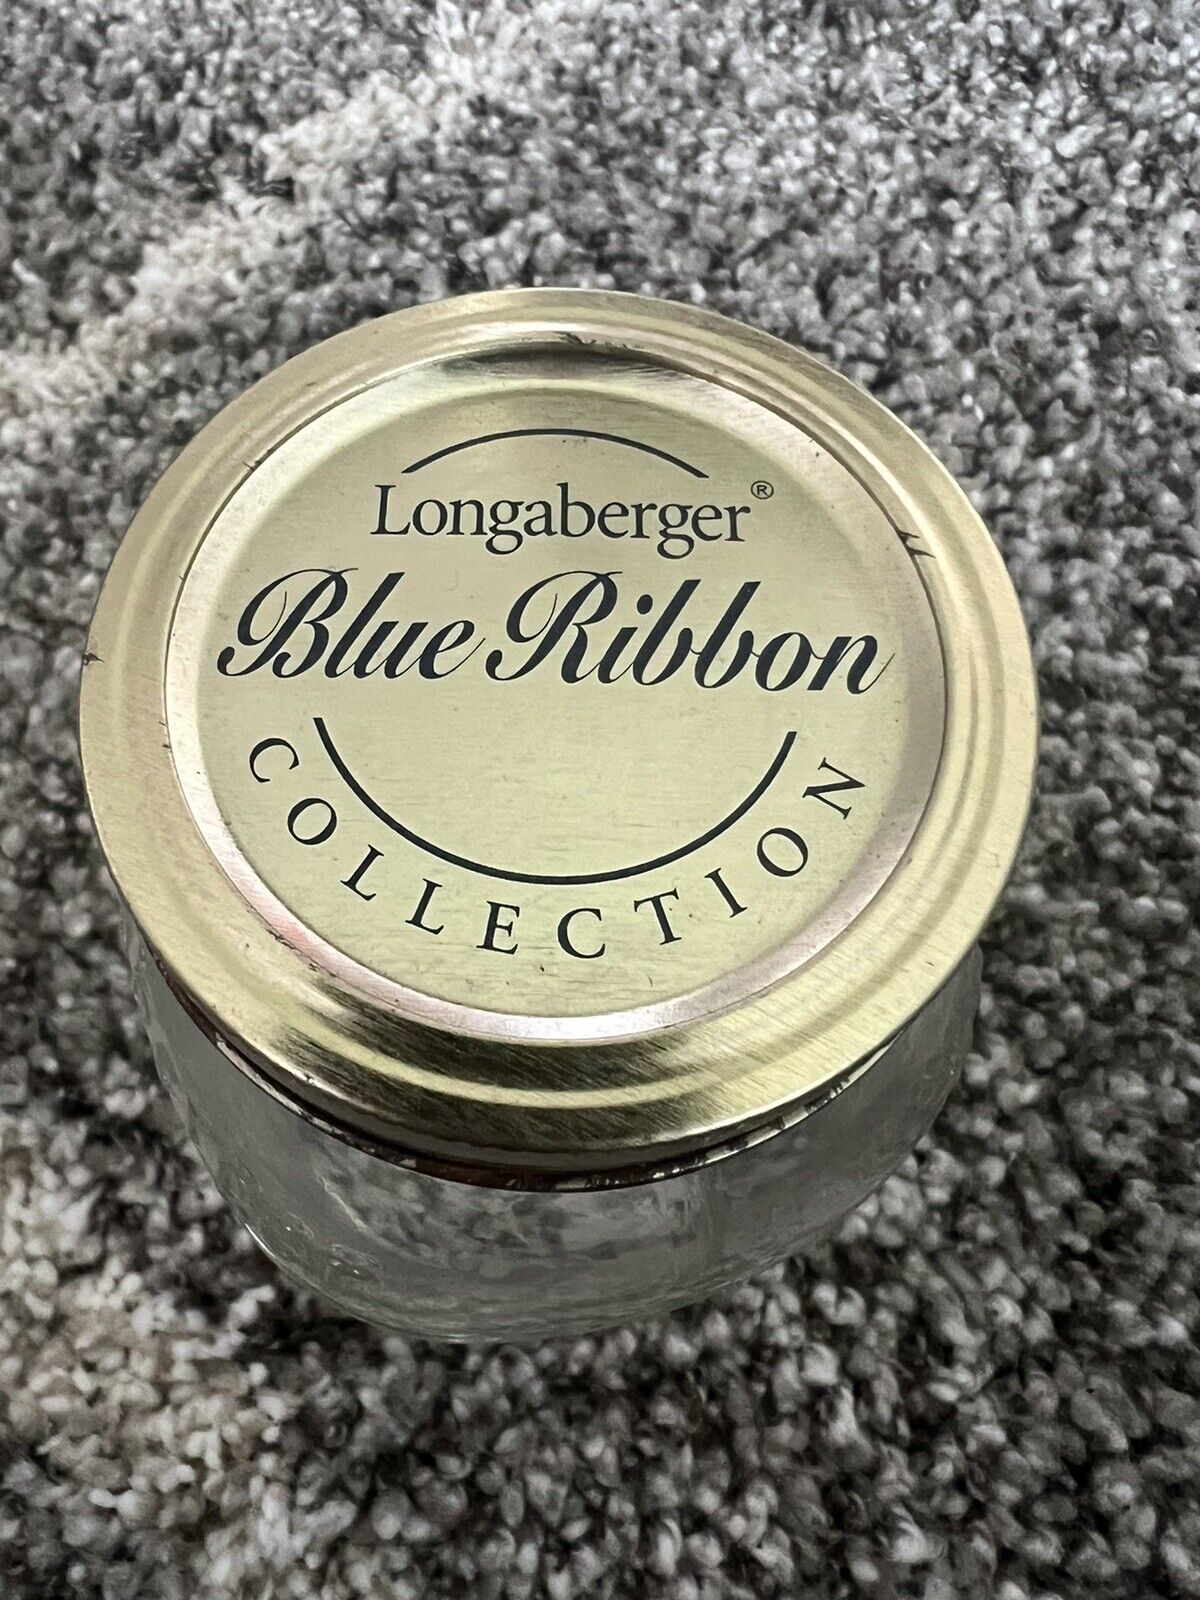 Longaberger Woven Traditions Blue Ribbon Quart Clear Glass Canning Jar